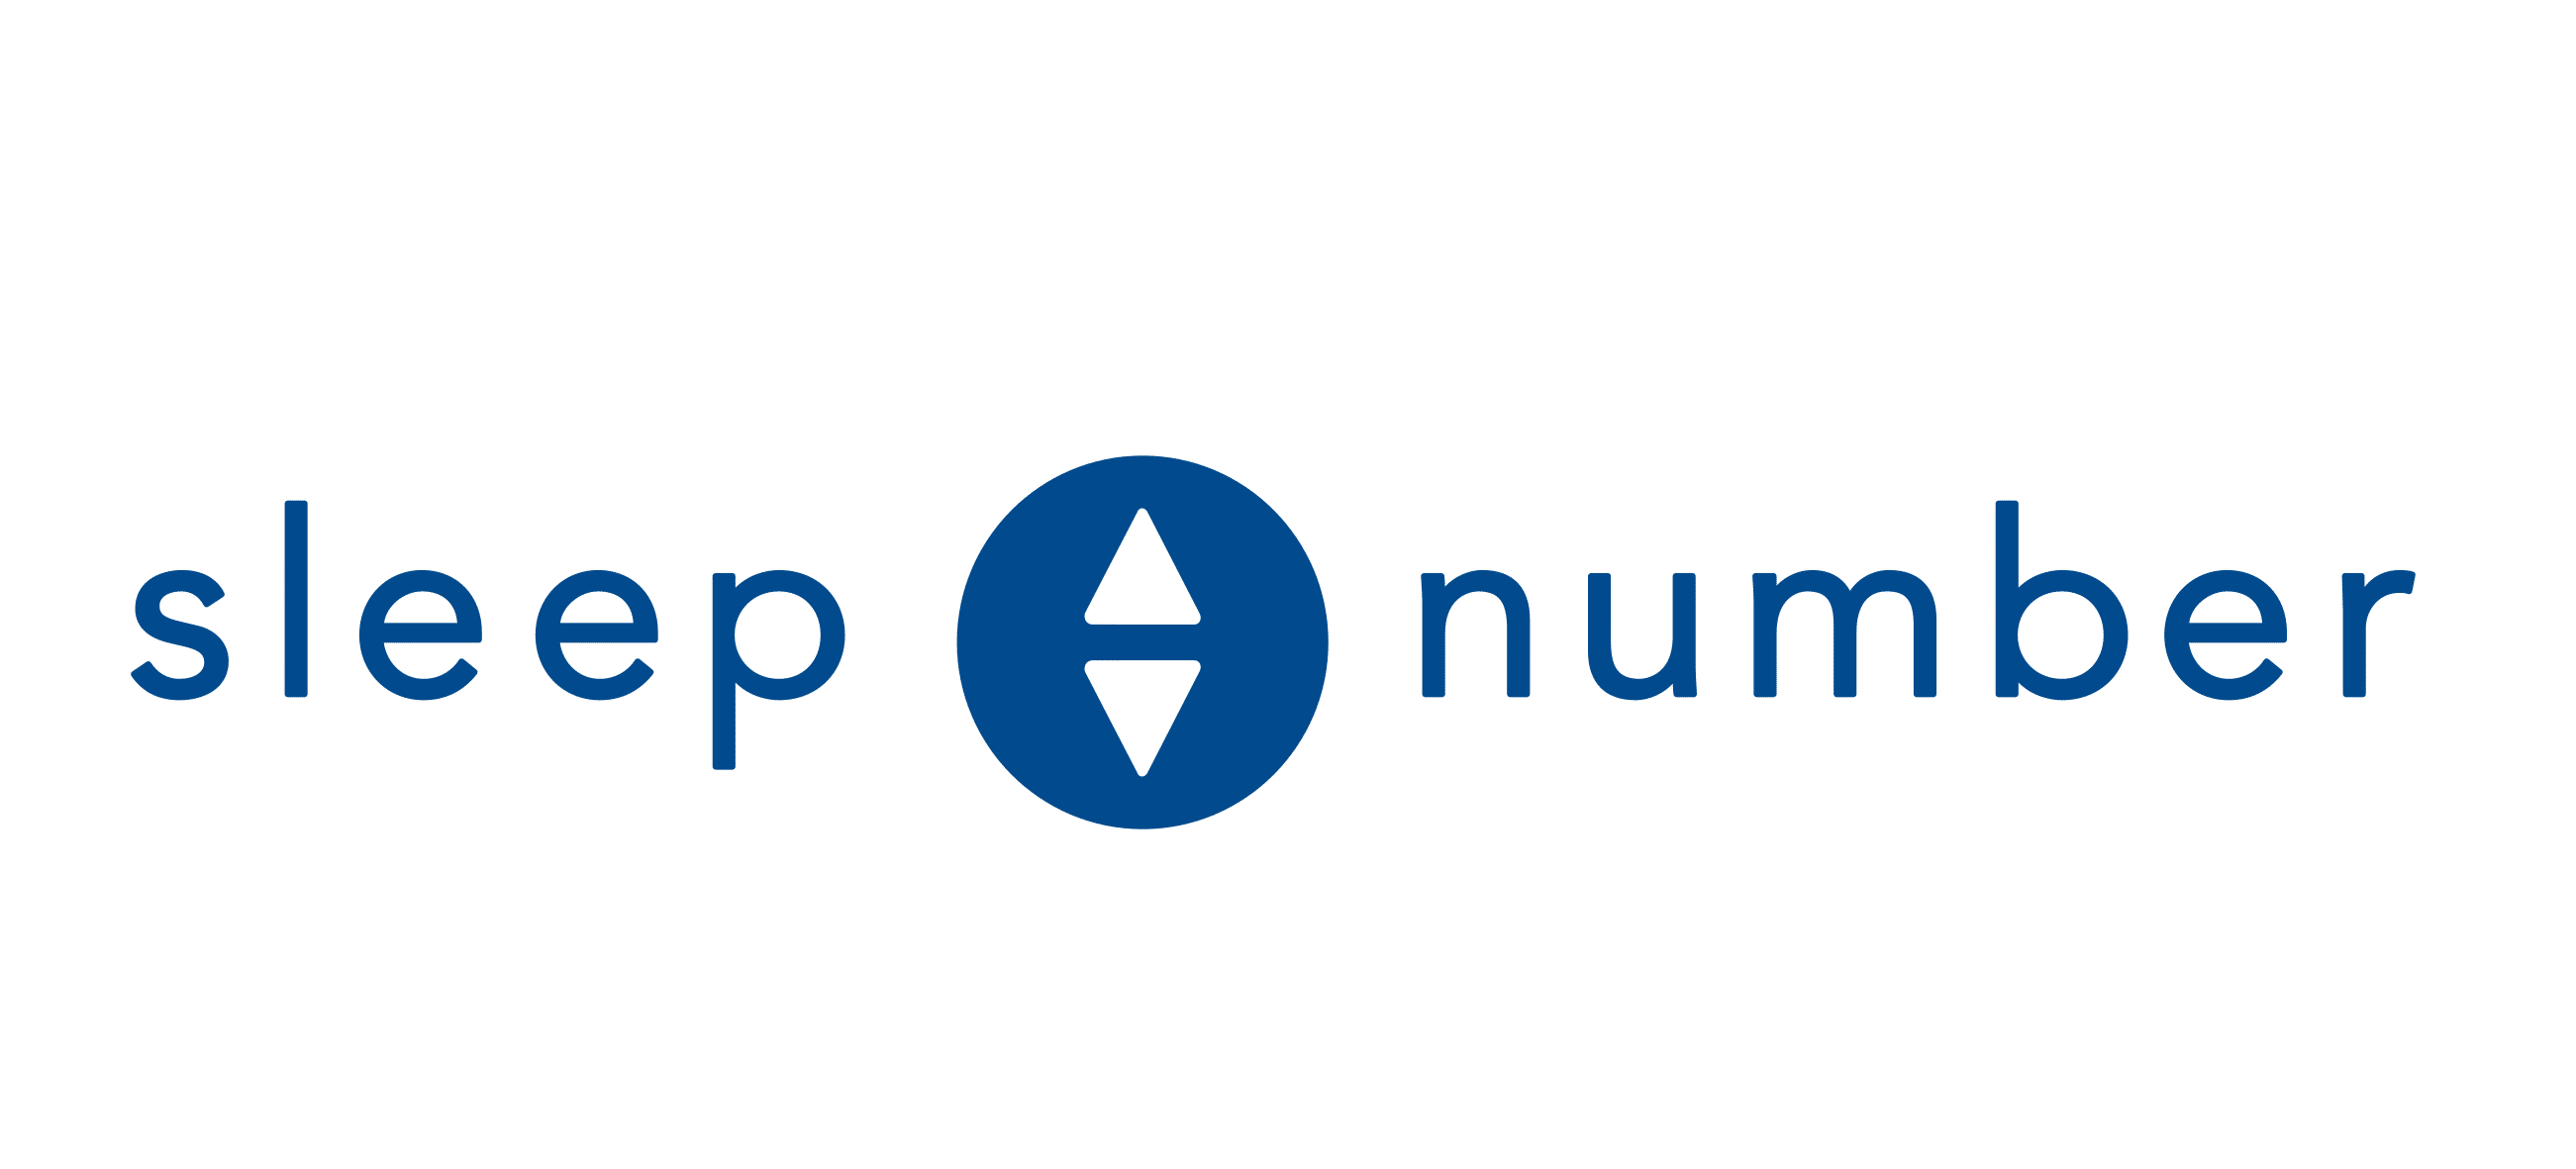 sleep-number-logo